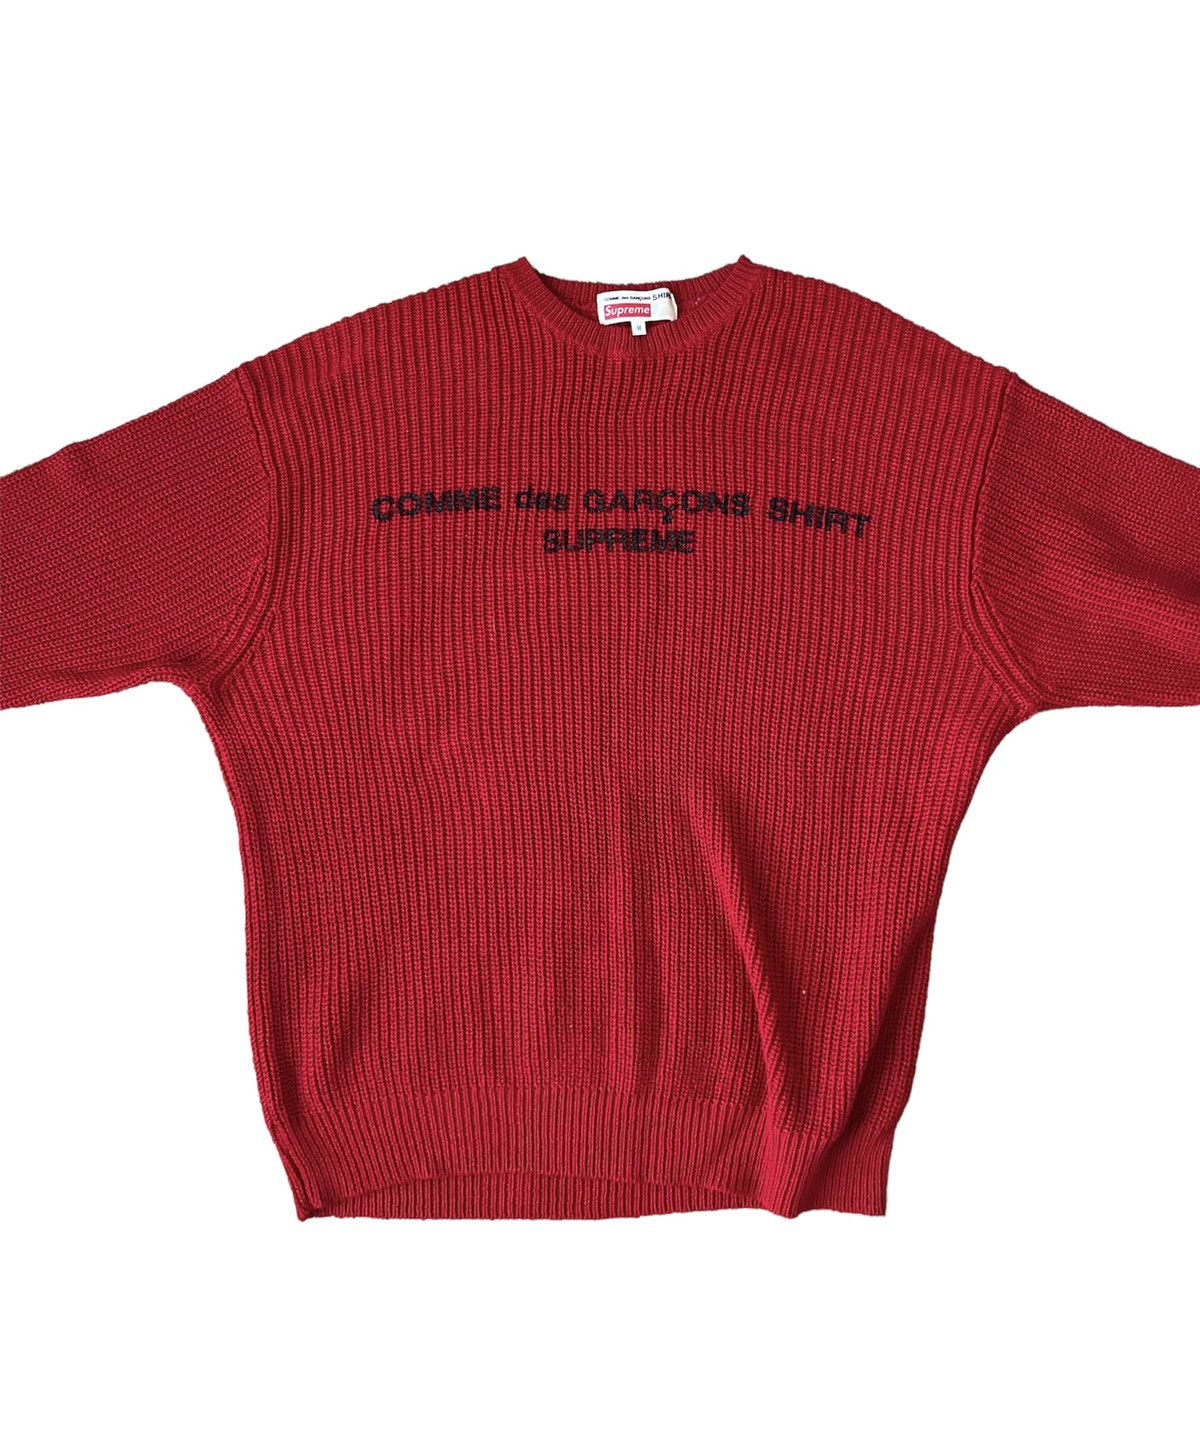 Supreme Supreme CDG Knit Sweater Red 2018 | Grailed